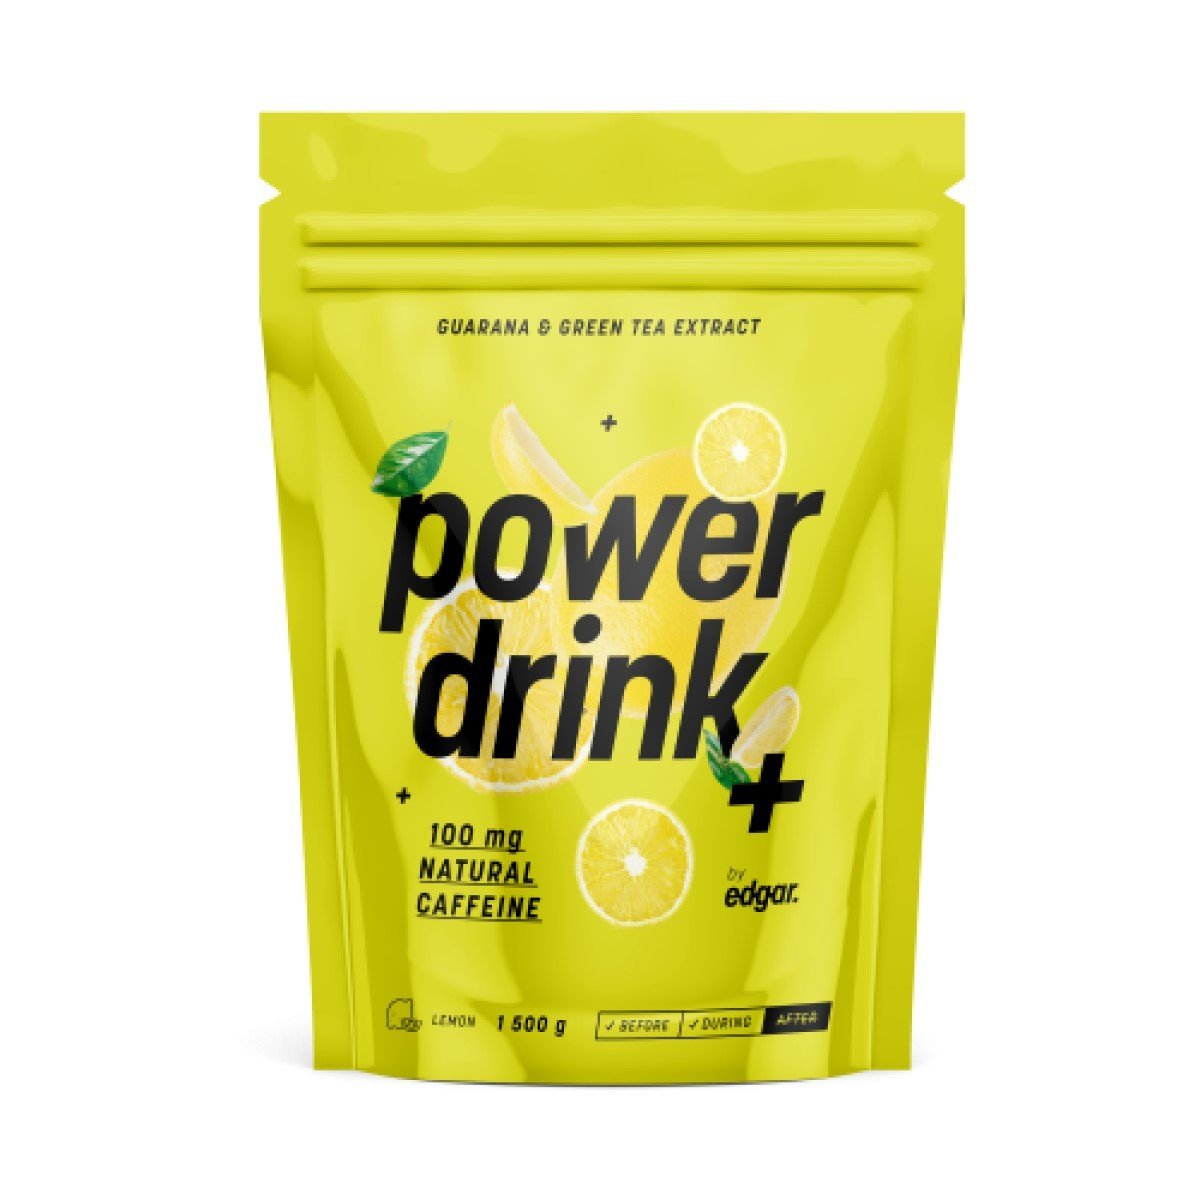 Powerdrink Edgar +, 100 g, citrón